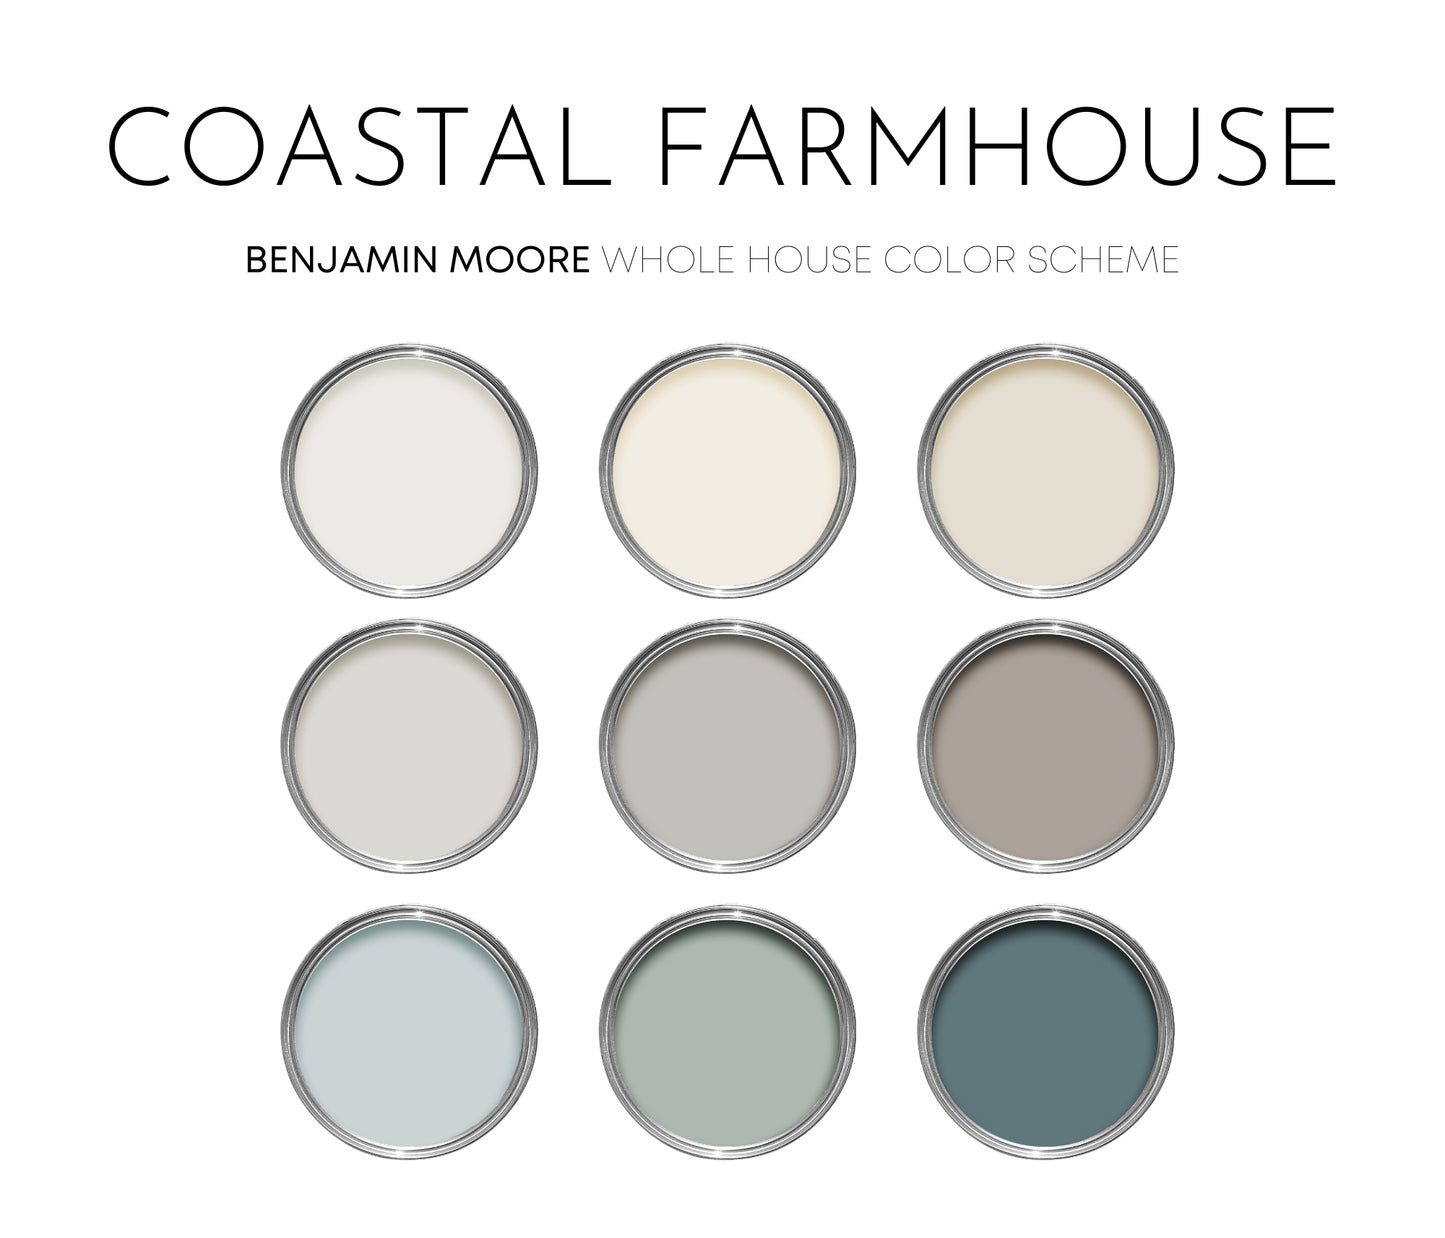 Coastal Farmhouse Benjamin Moore Paint Palette, Interior Paint Colors for Home, Calm Neutrals, Beach House, Beach Glass